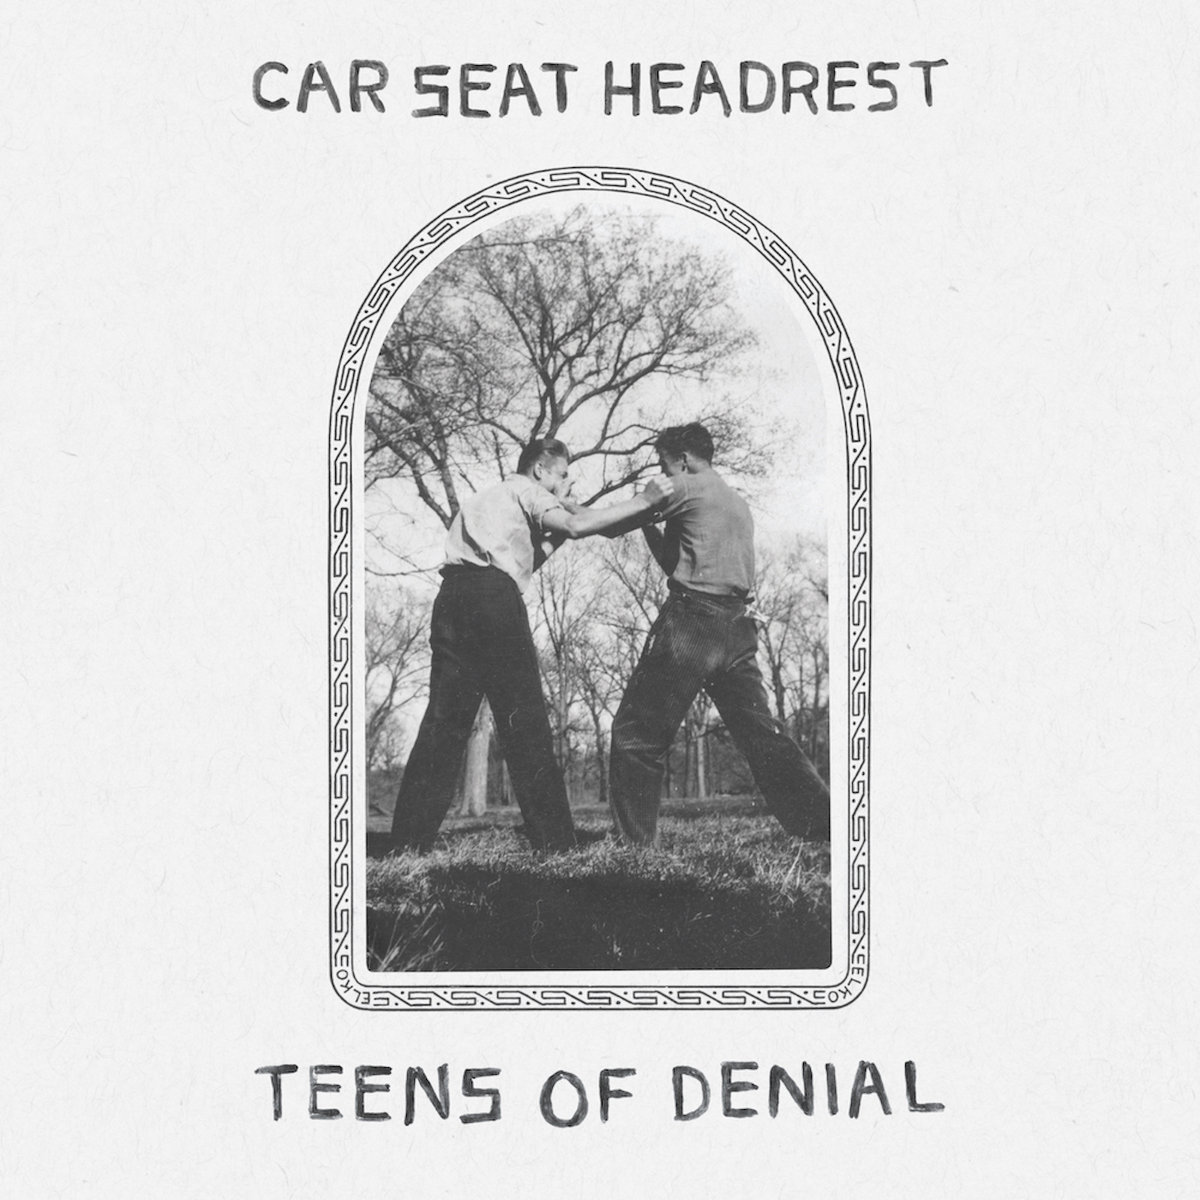 Portada de Teens of Denial, el nuevo disco de Car Seat Headrest